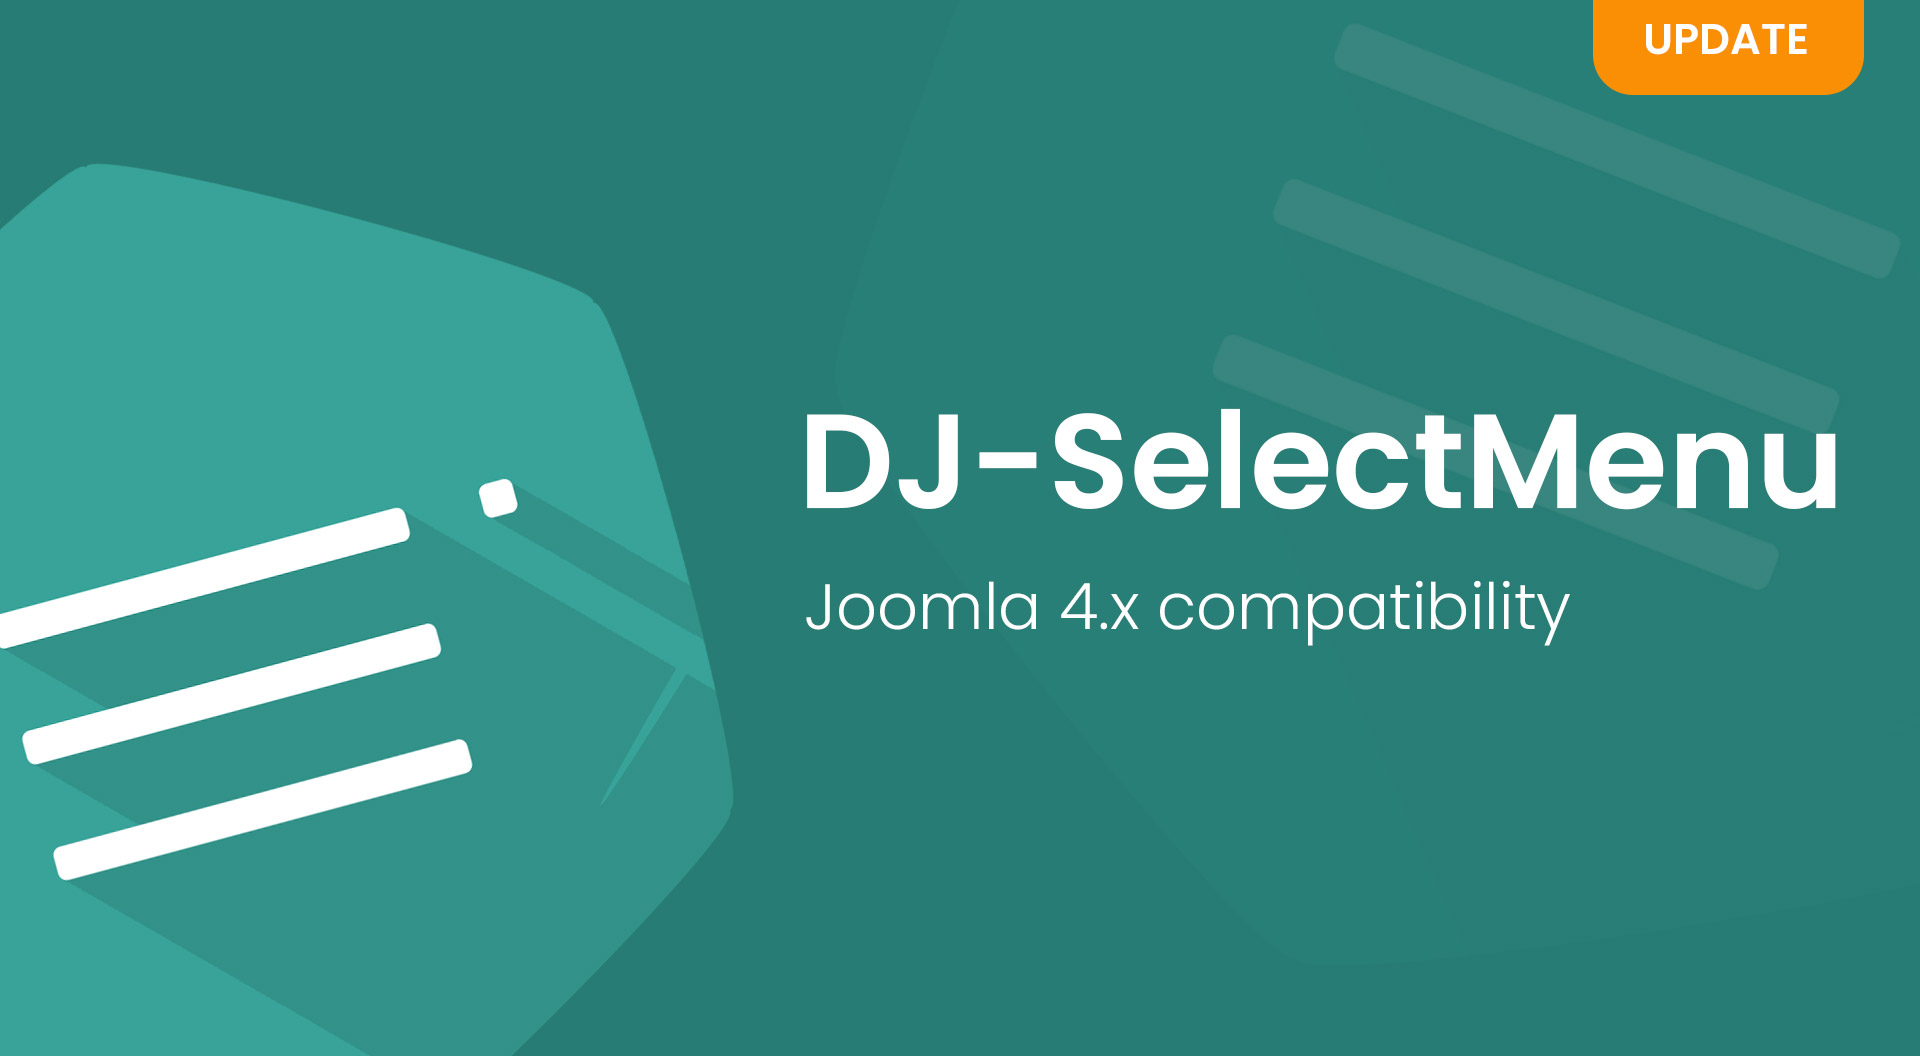 DJ-SelectMenu for Joomla 4.x